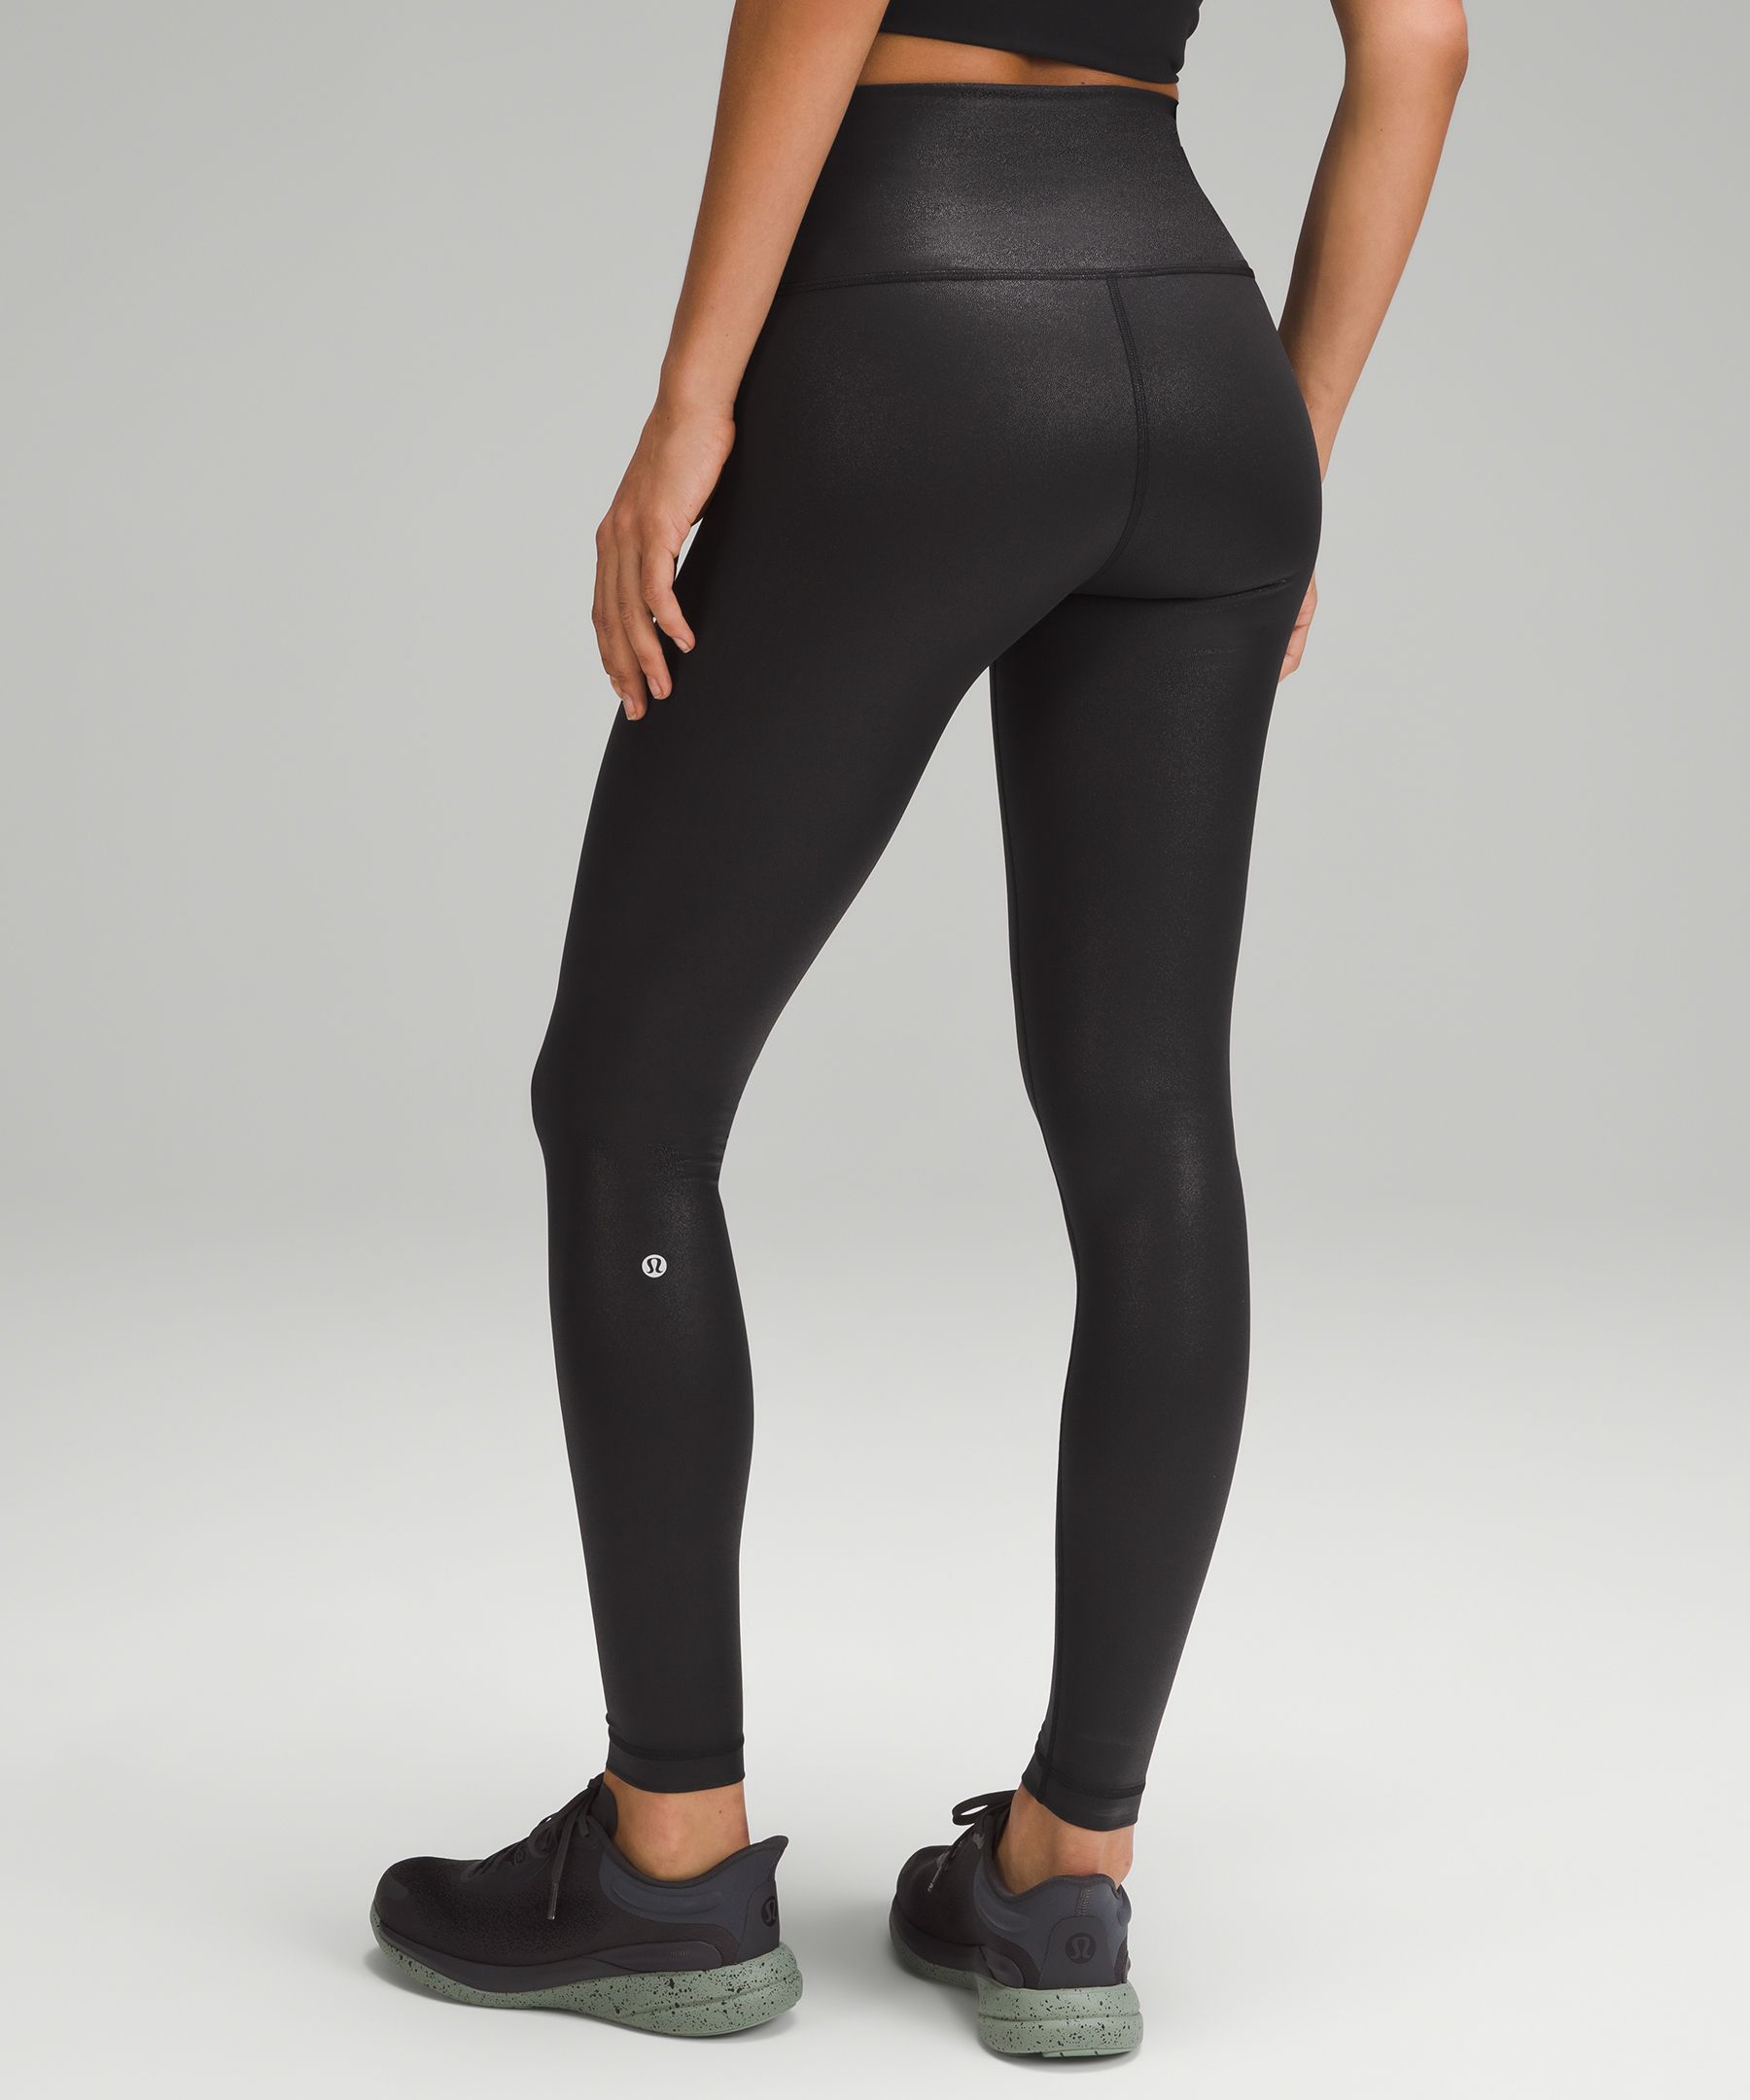 Lululemon Black Leggings Size 6 - $34 (72% Off Retail) - From Mary